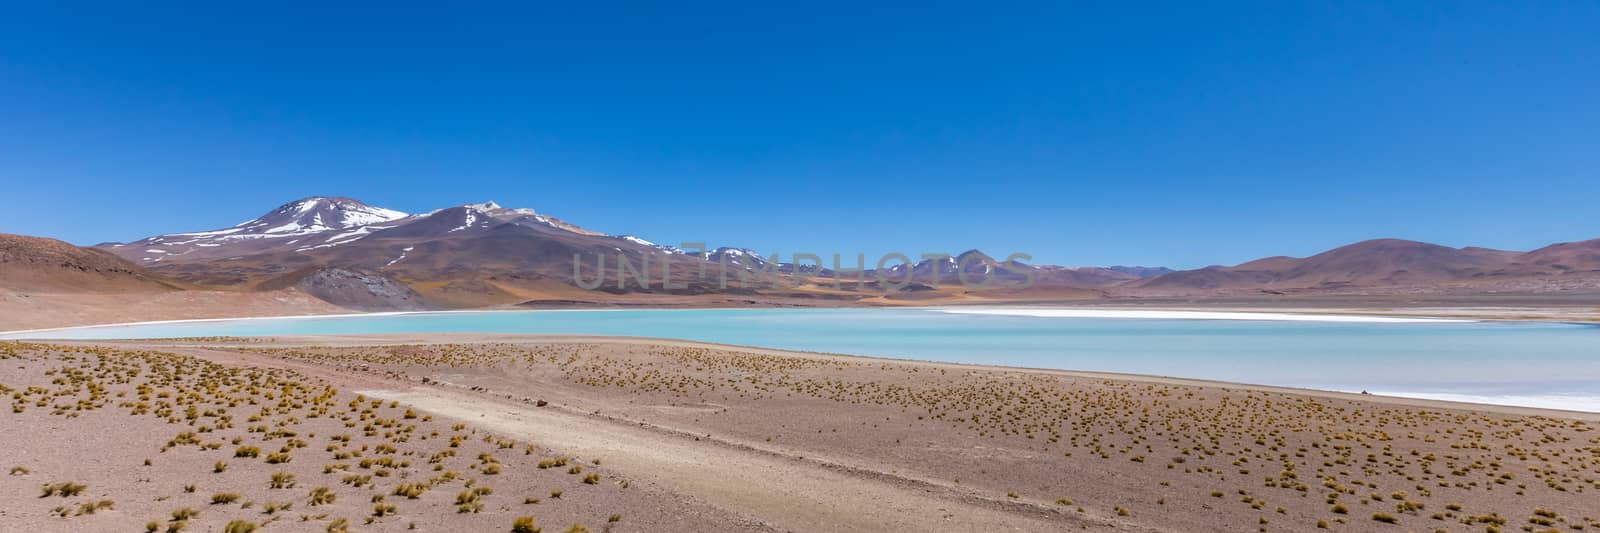 Atacama Desert, Chile. Salar Aguas Calientes. Lake Tuyacto. South America. by SeuMelhorClick